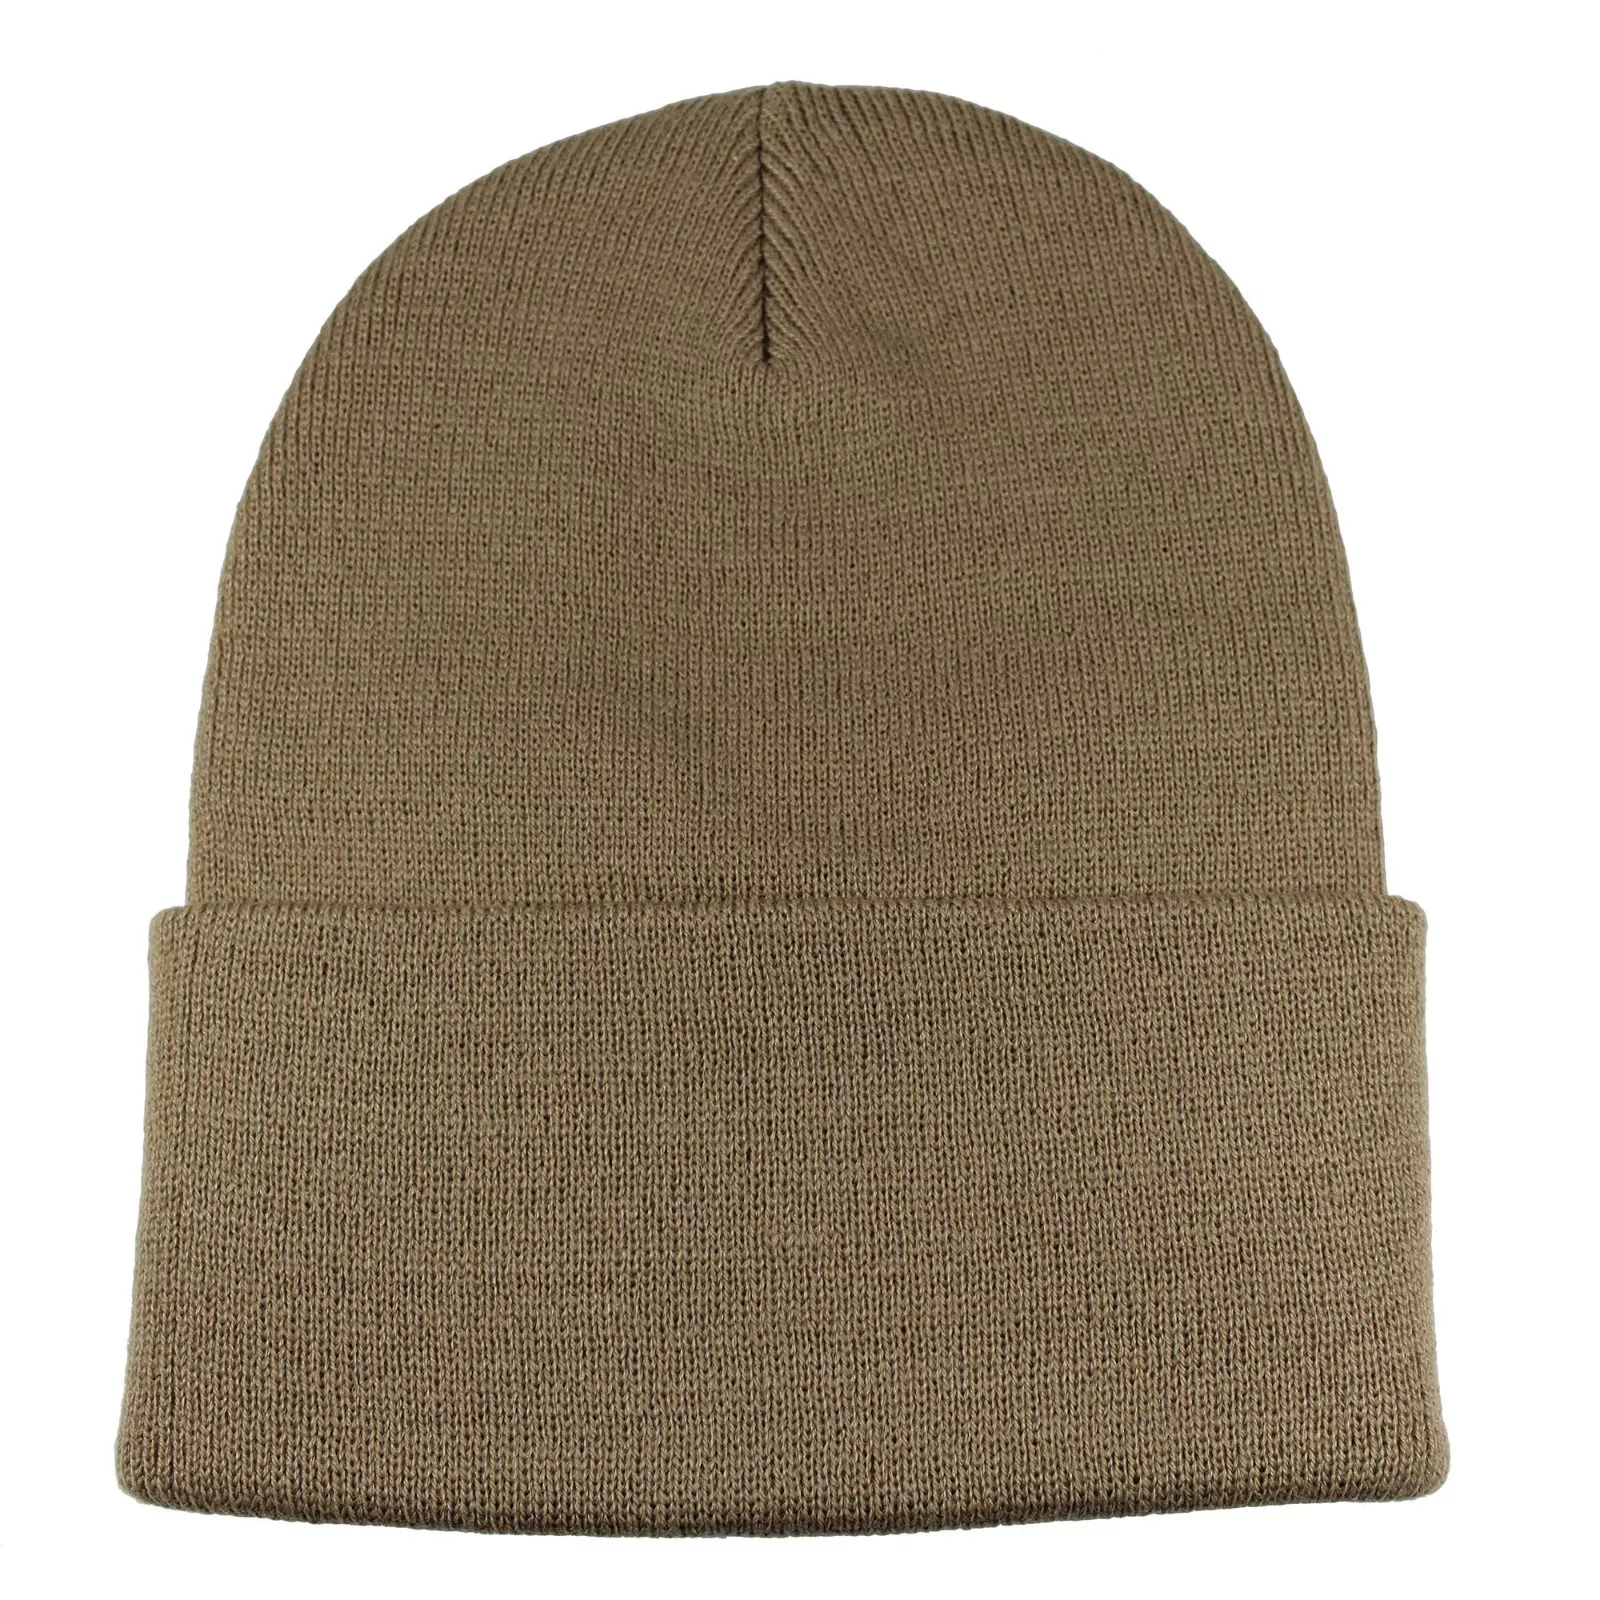 Unisex Plain Warm Knit Beanie Hat Cuff Skull Ski Cap Khaki1pcs - £7.91 GBP